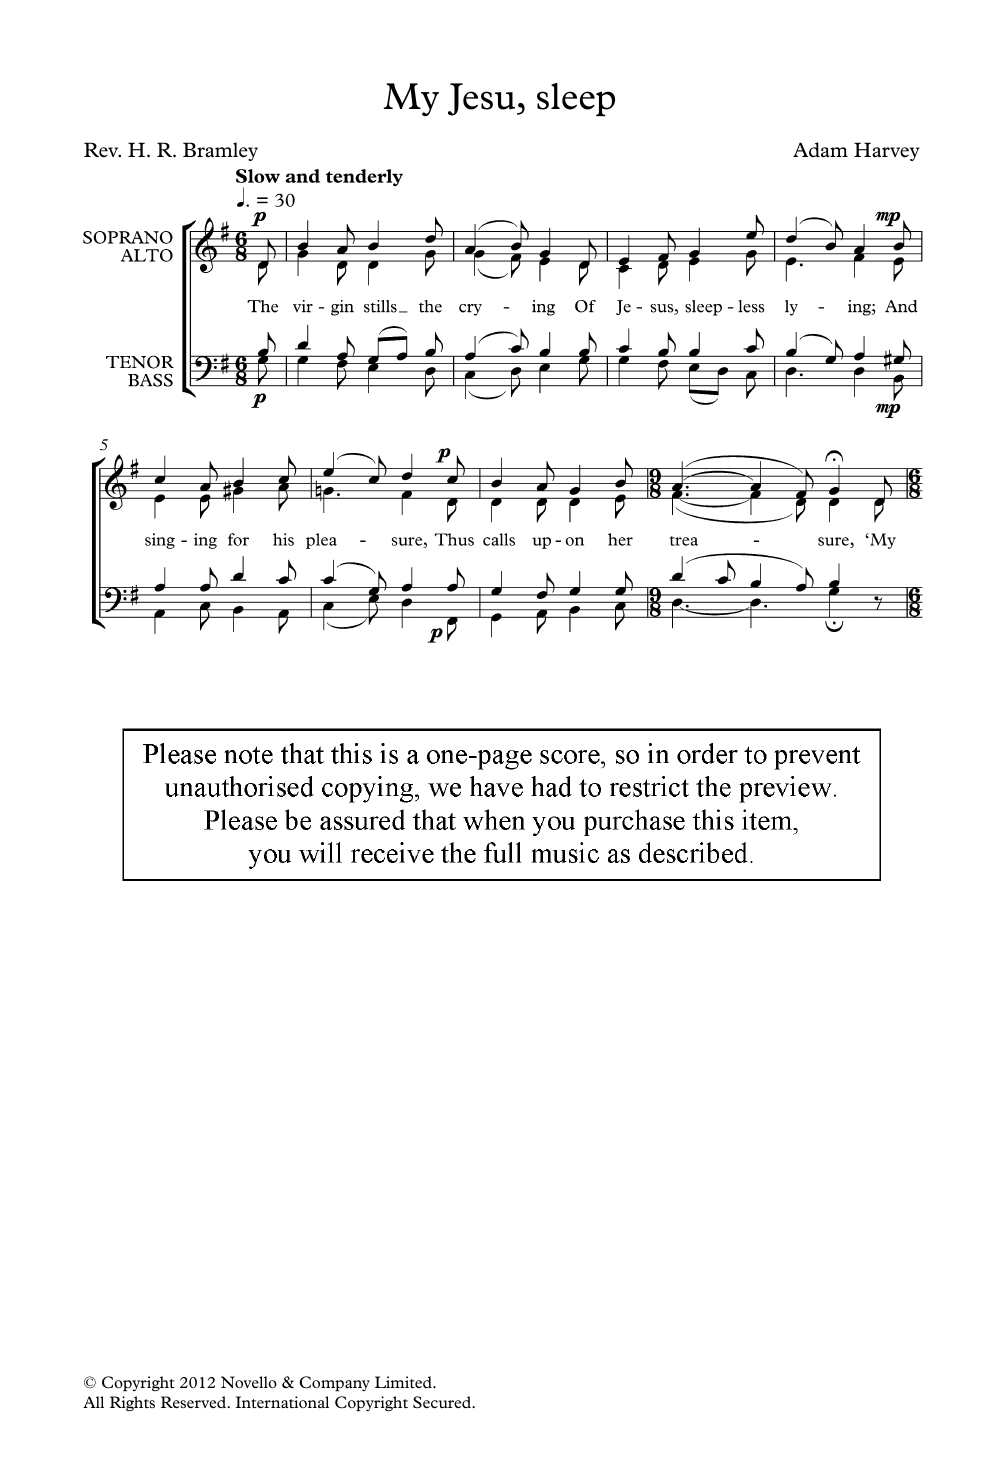 Download Adam Harvey My Jesu, Sleep Sheet Music and learn how to play Choir PDF digital score in minutes